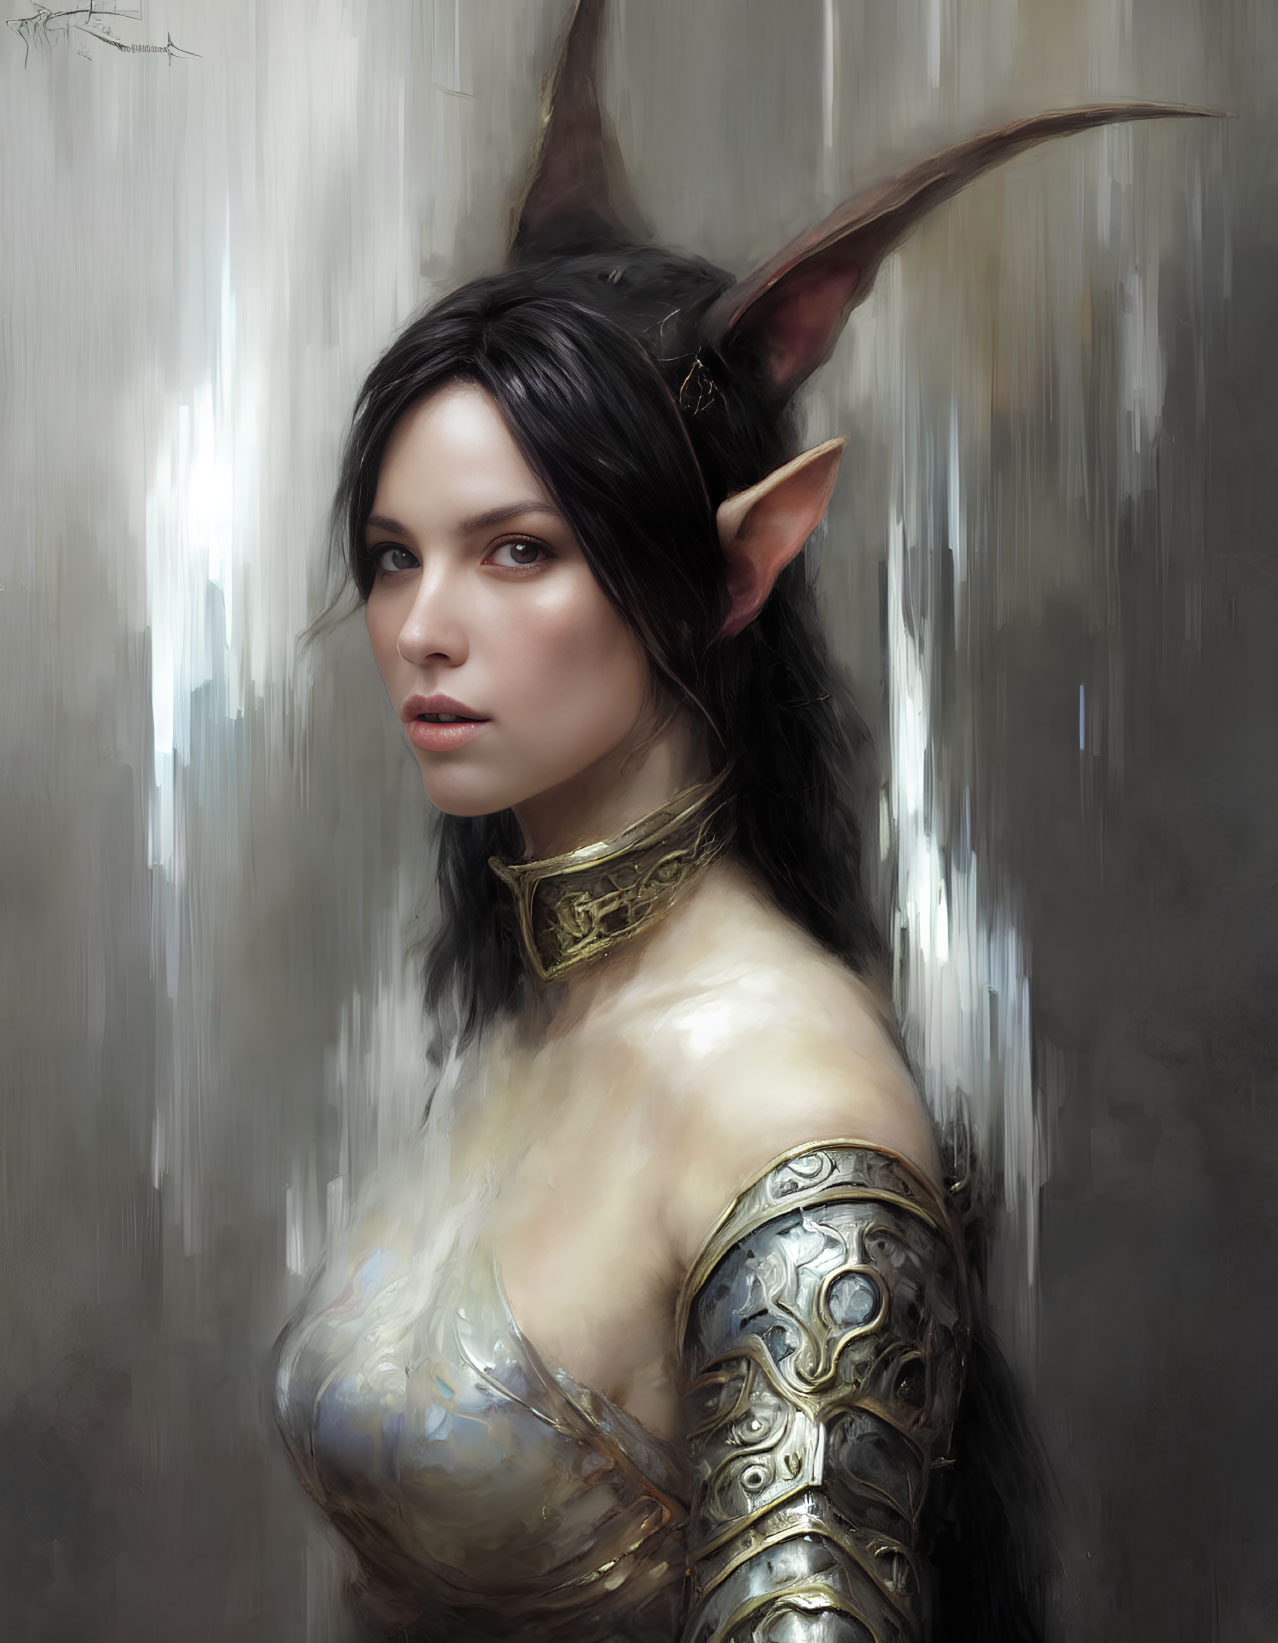 Fantasy female elf portrait with pointed ears, dark hair, and ornate metallic armor